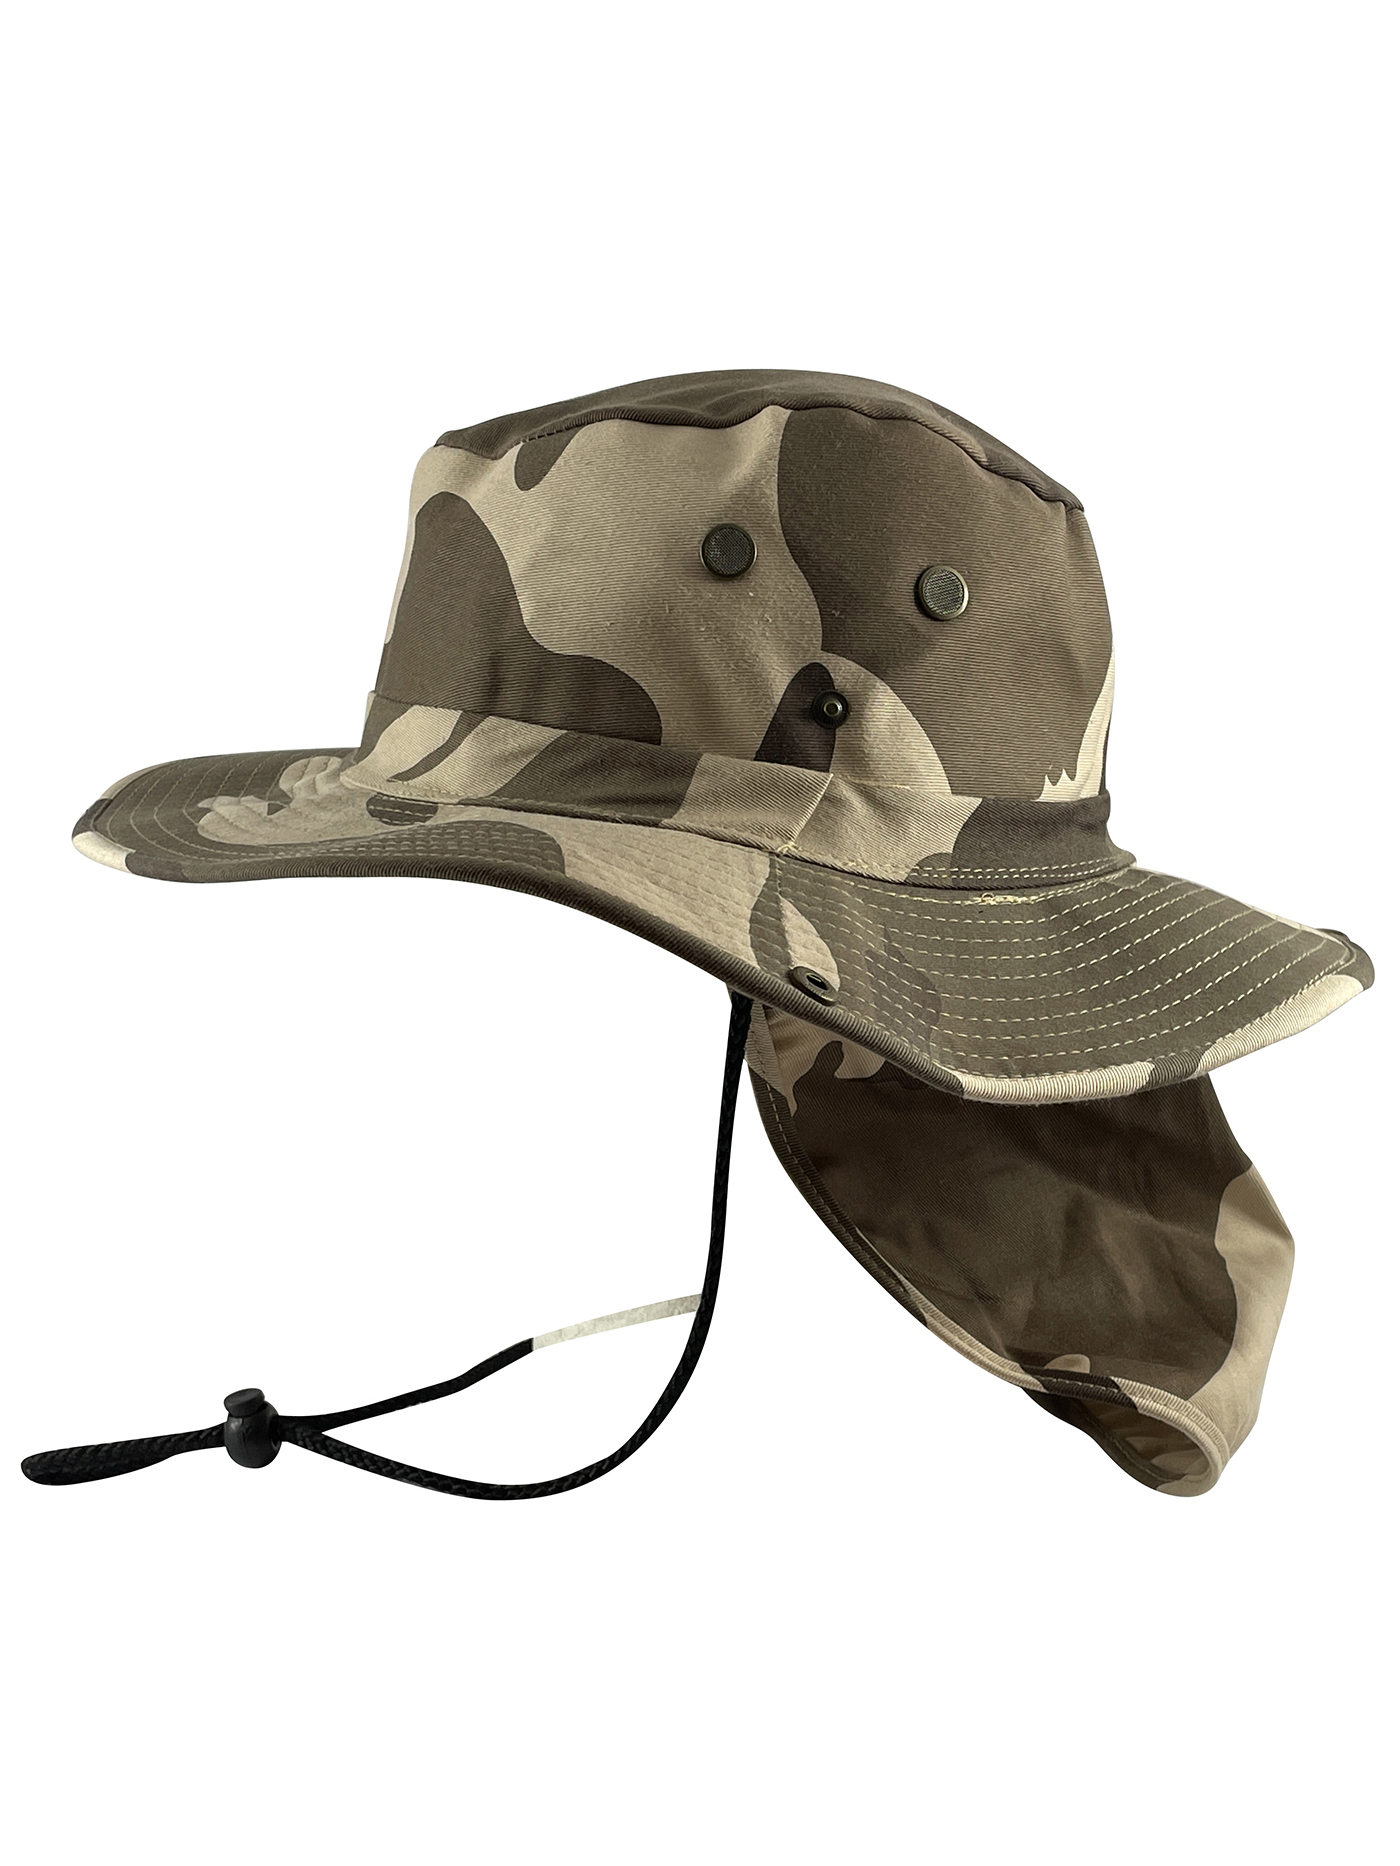 Top Headwear Safari Explorer Bucket Hat Flap Neck Cover - Desert Camo - XL - image 2 of 3